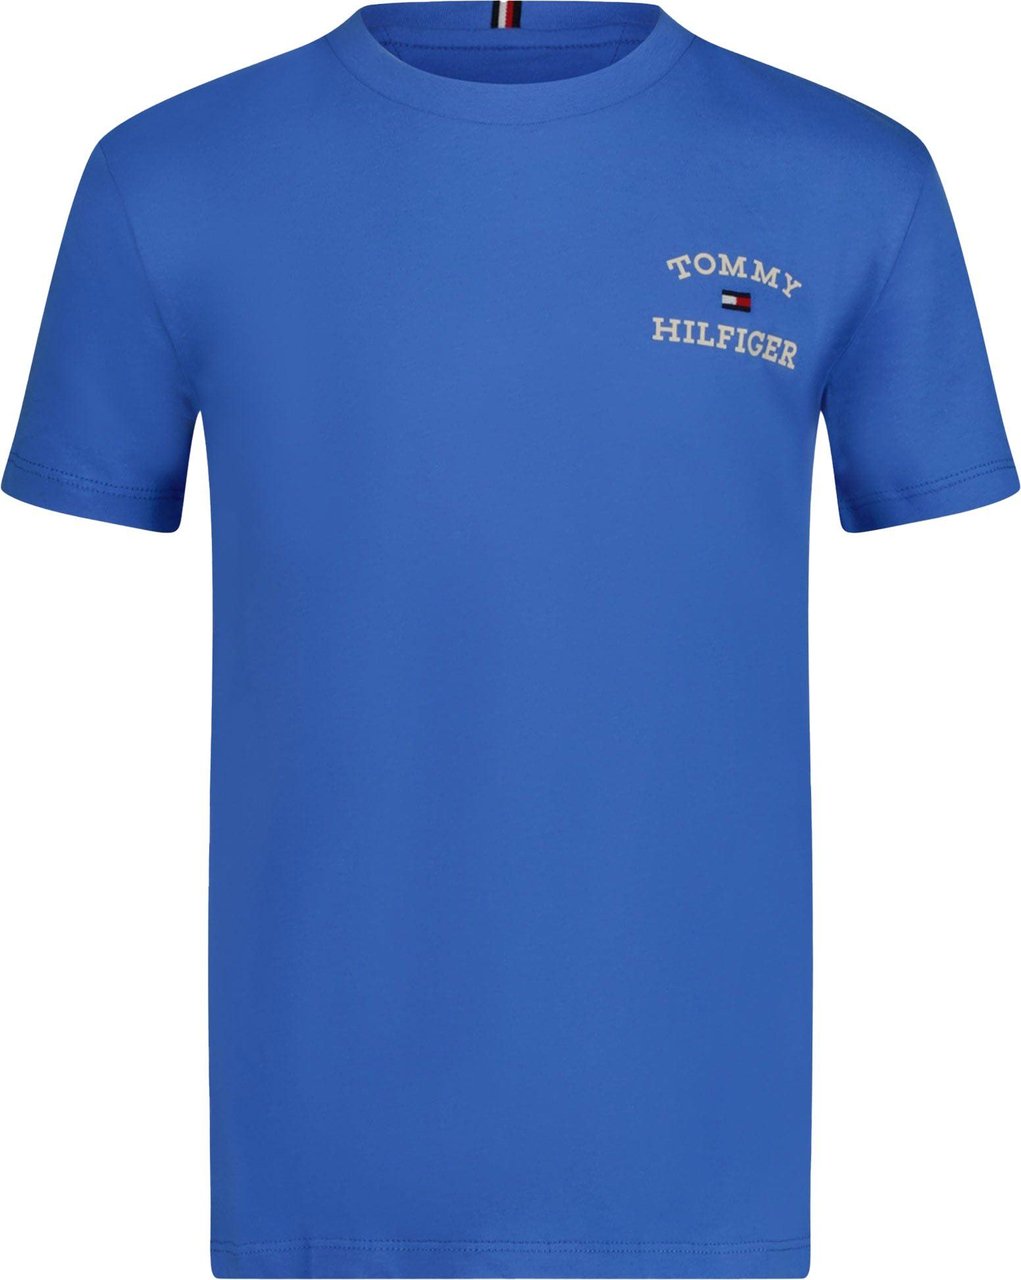 Tommy Hilfiger Tommy Hilfiger Baby Jongens T-shirt Blauw Blauw